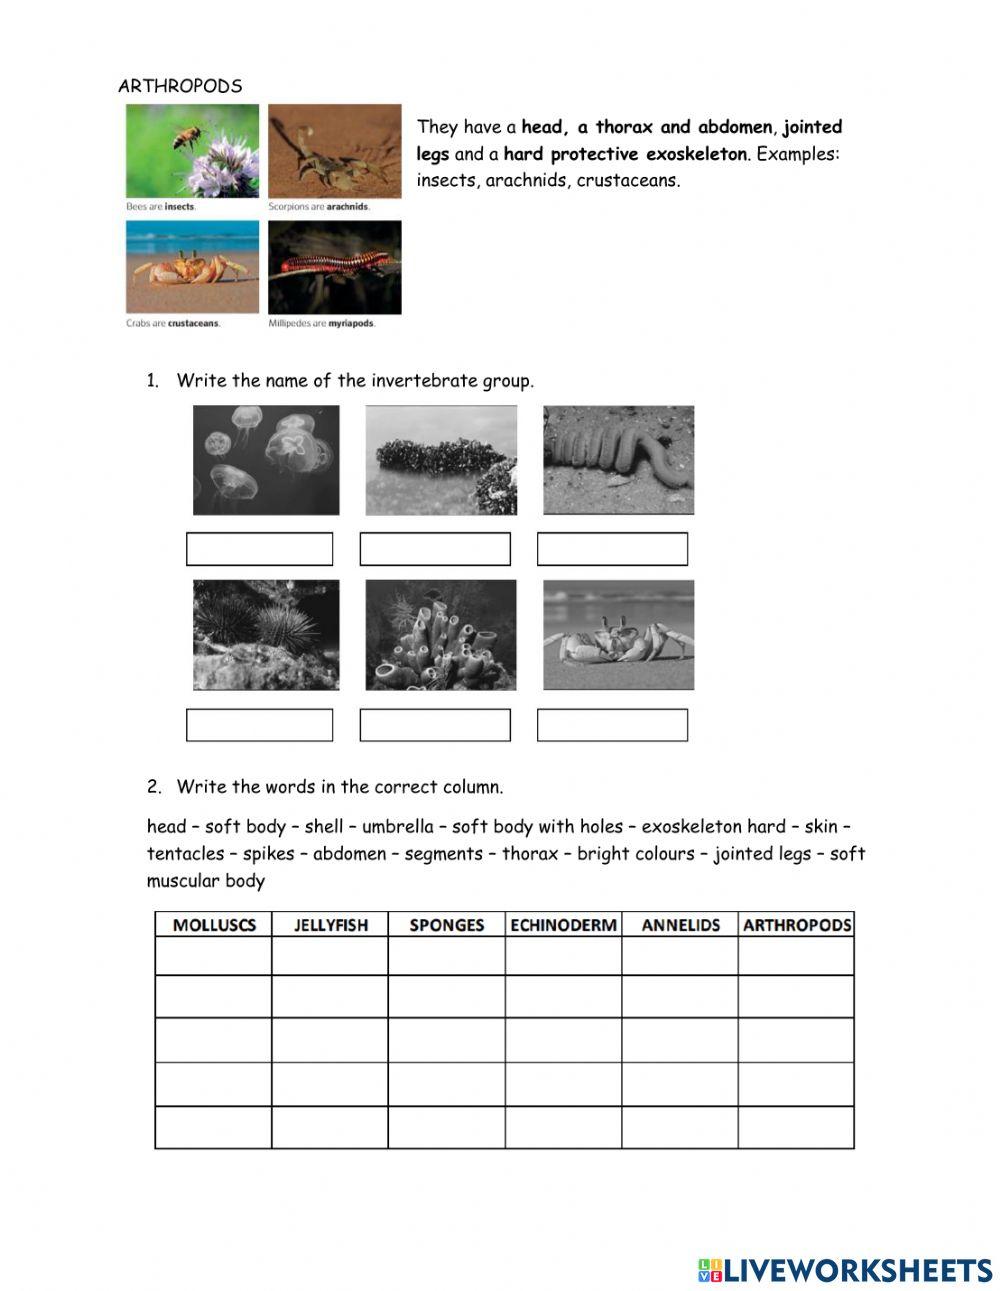 Invertebrates explanation and activities